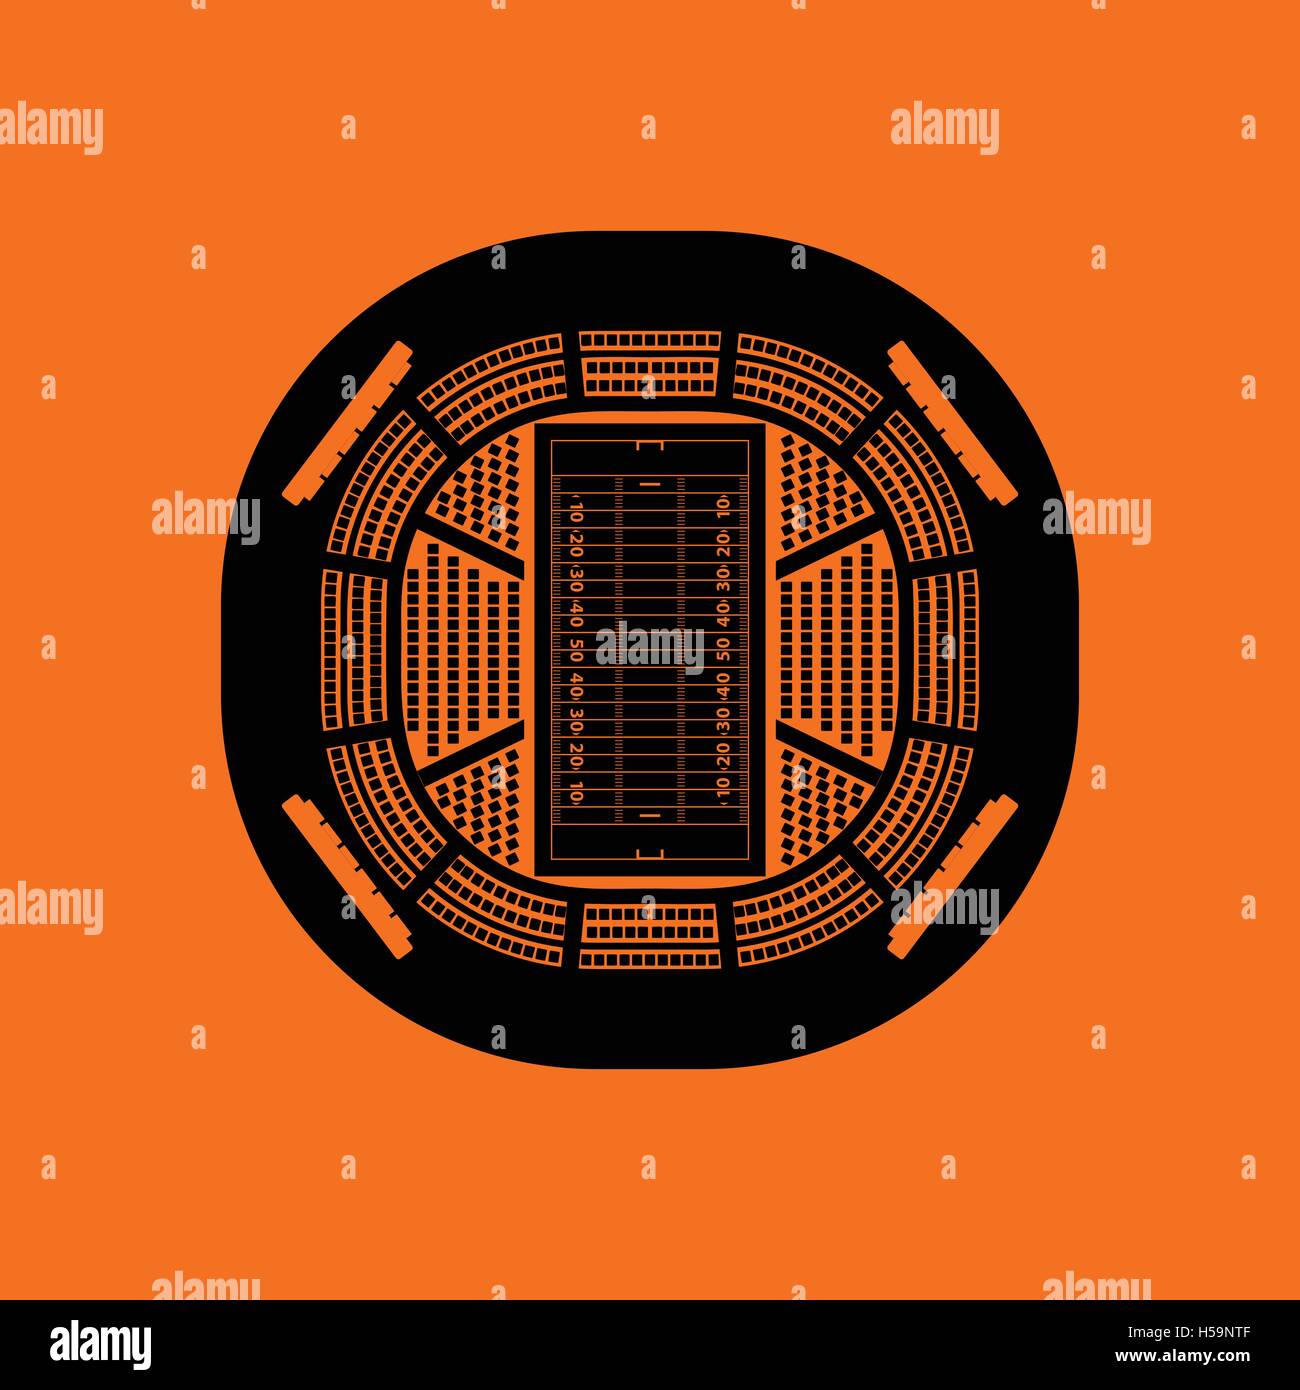 American football stadium bird's-eye view icon. Orange background with black. Vector illustration. Stock Vector